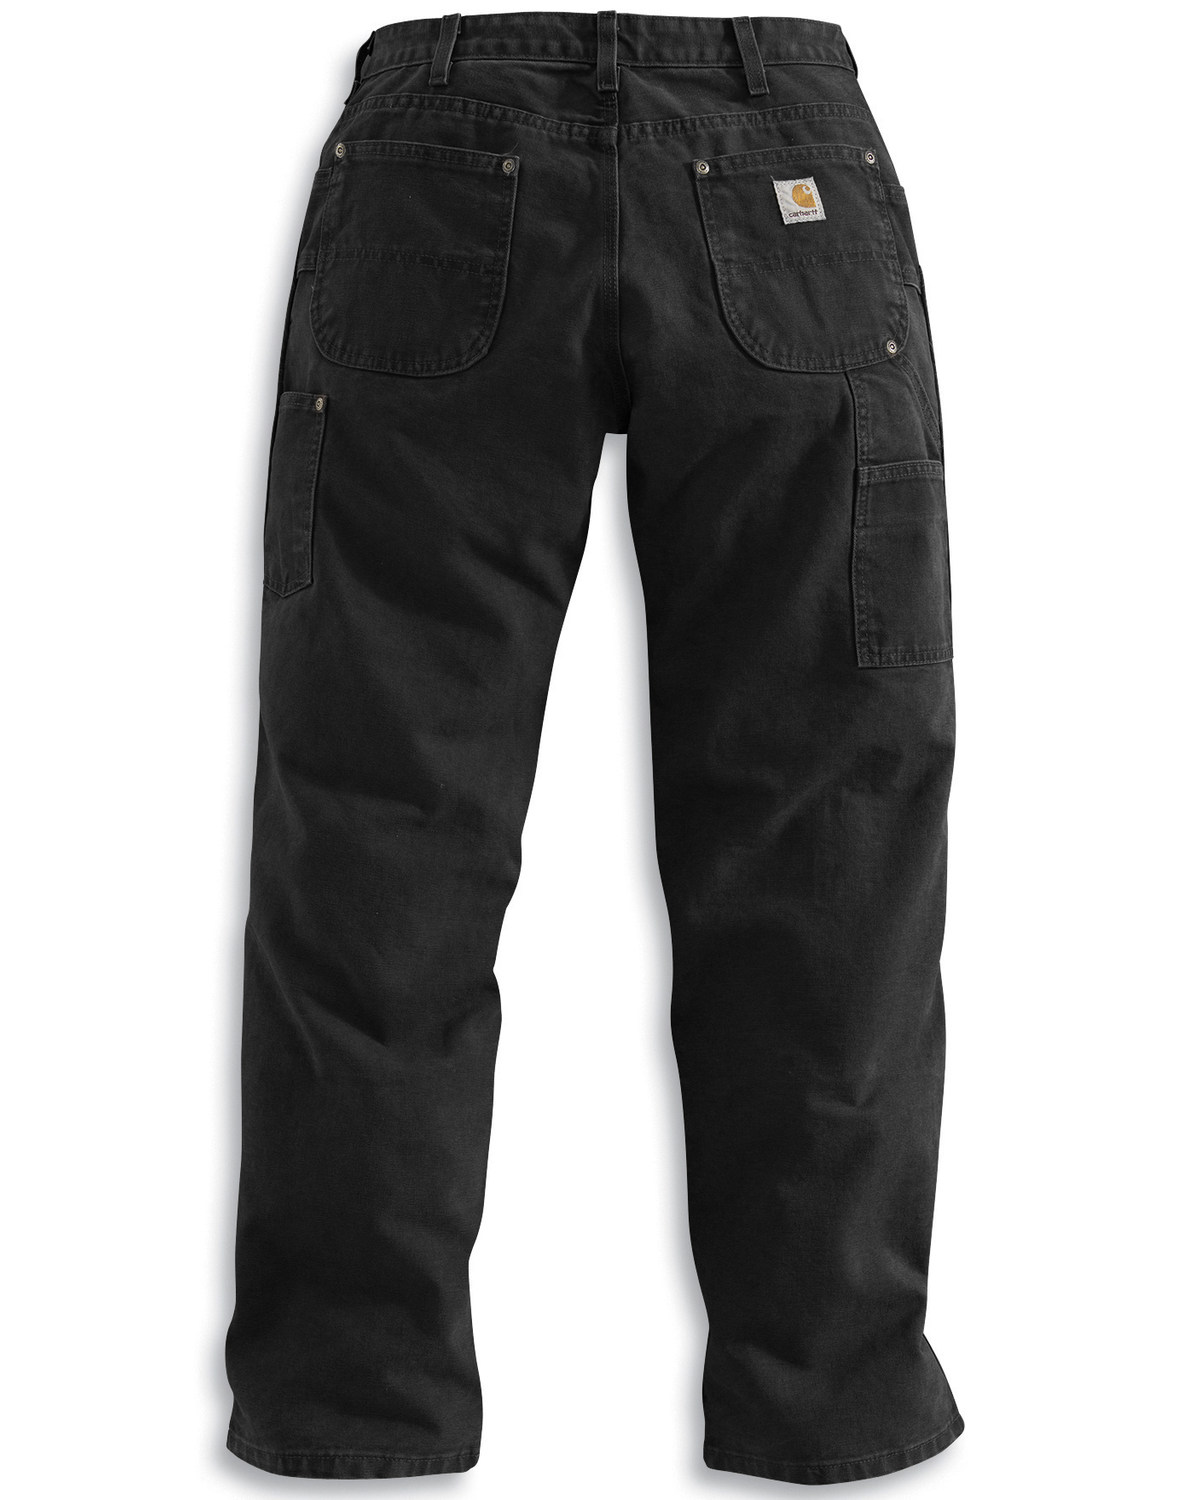 carhartt black jeans